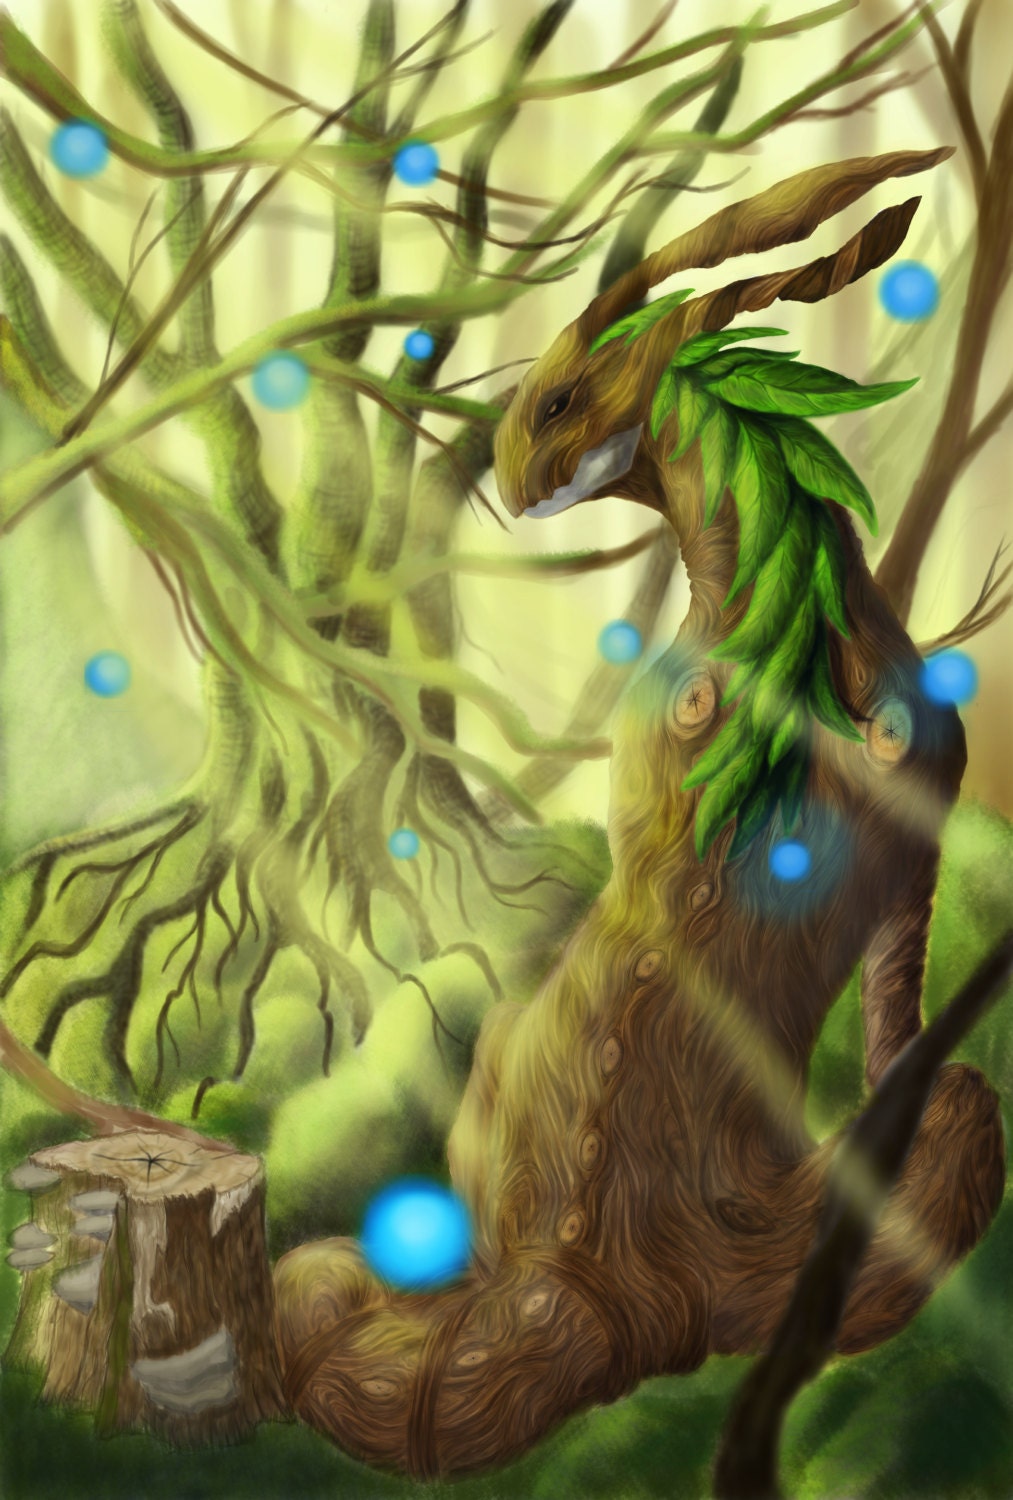 Tree Dragon by YellowFoxIllus on Etsy